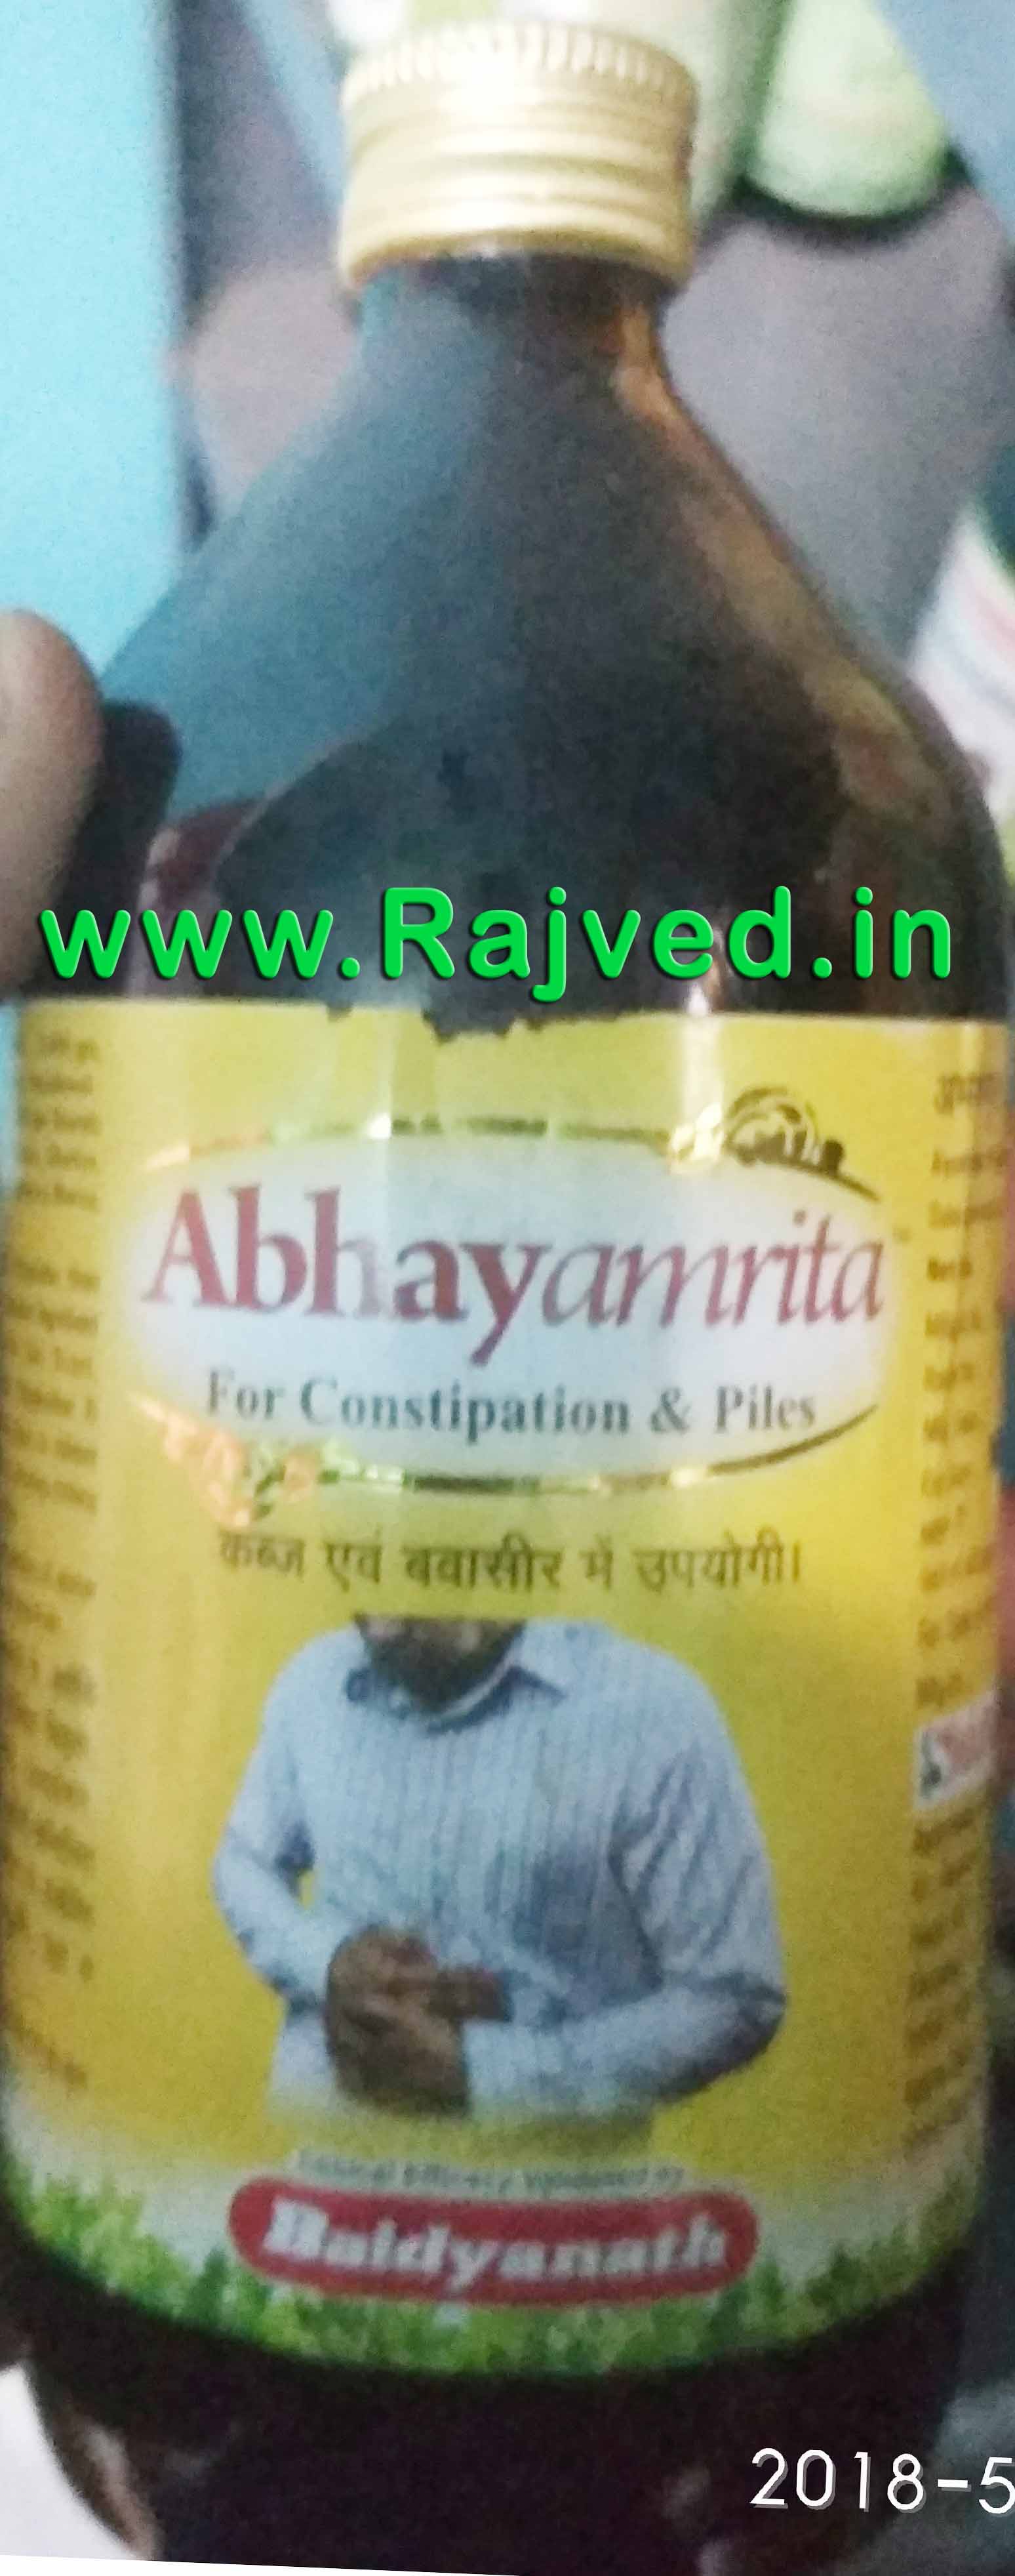 abhayamrita 450ml shree baidyanath ayurved bhavan